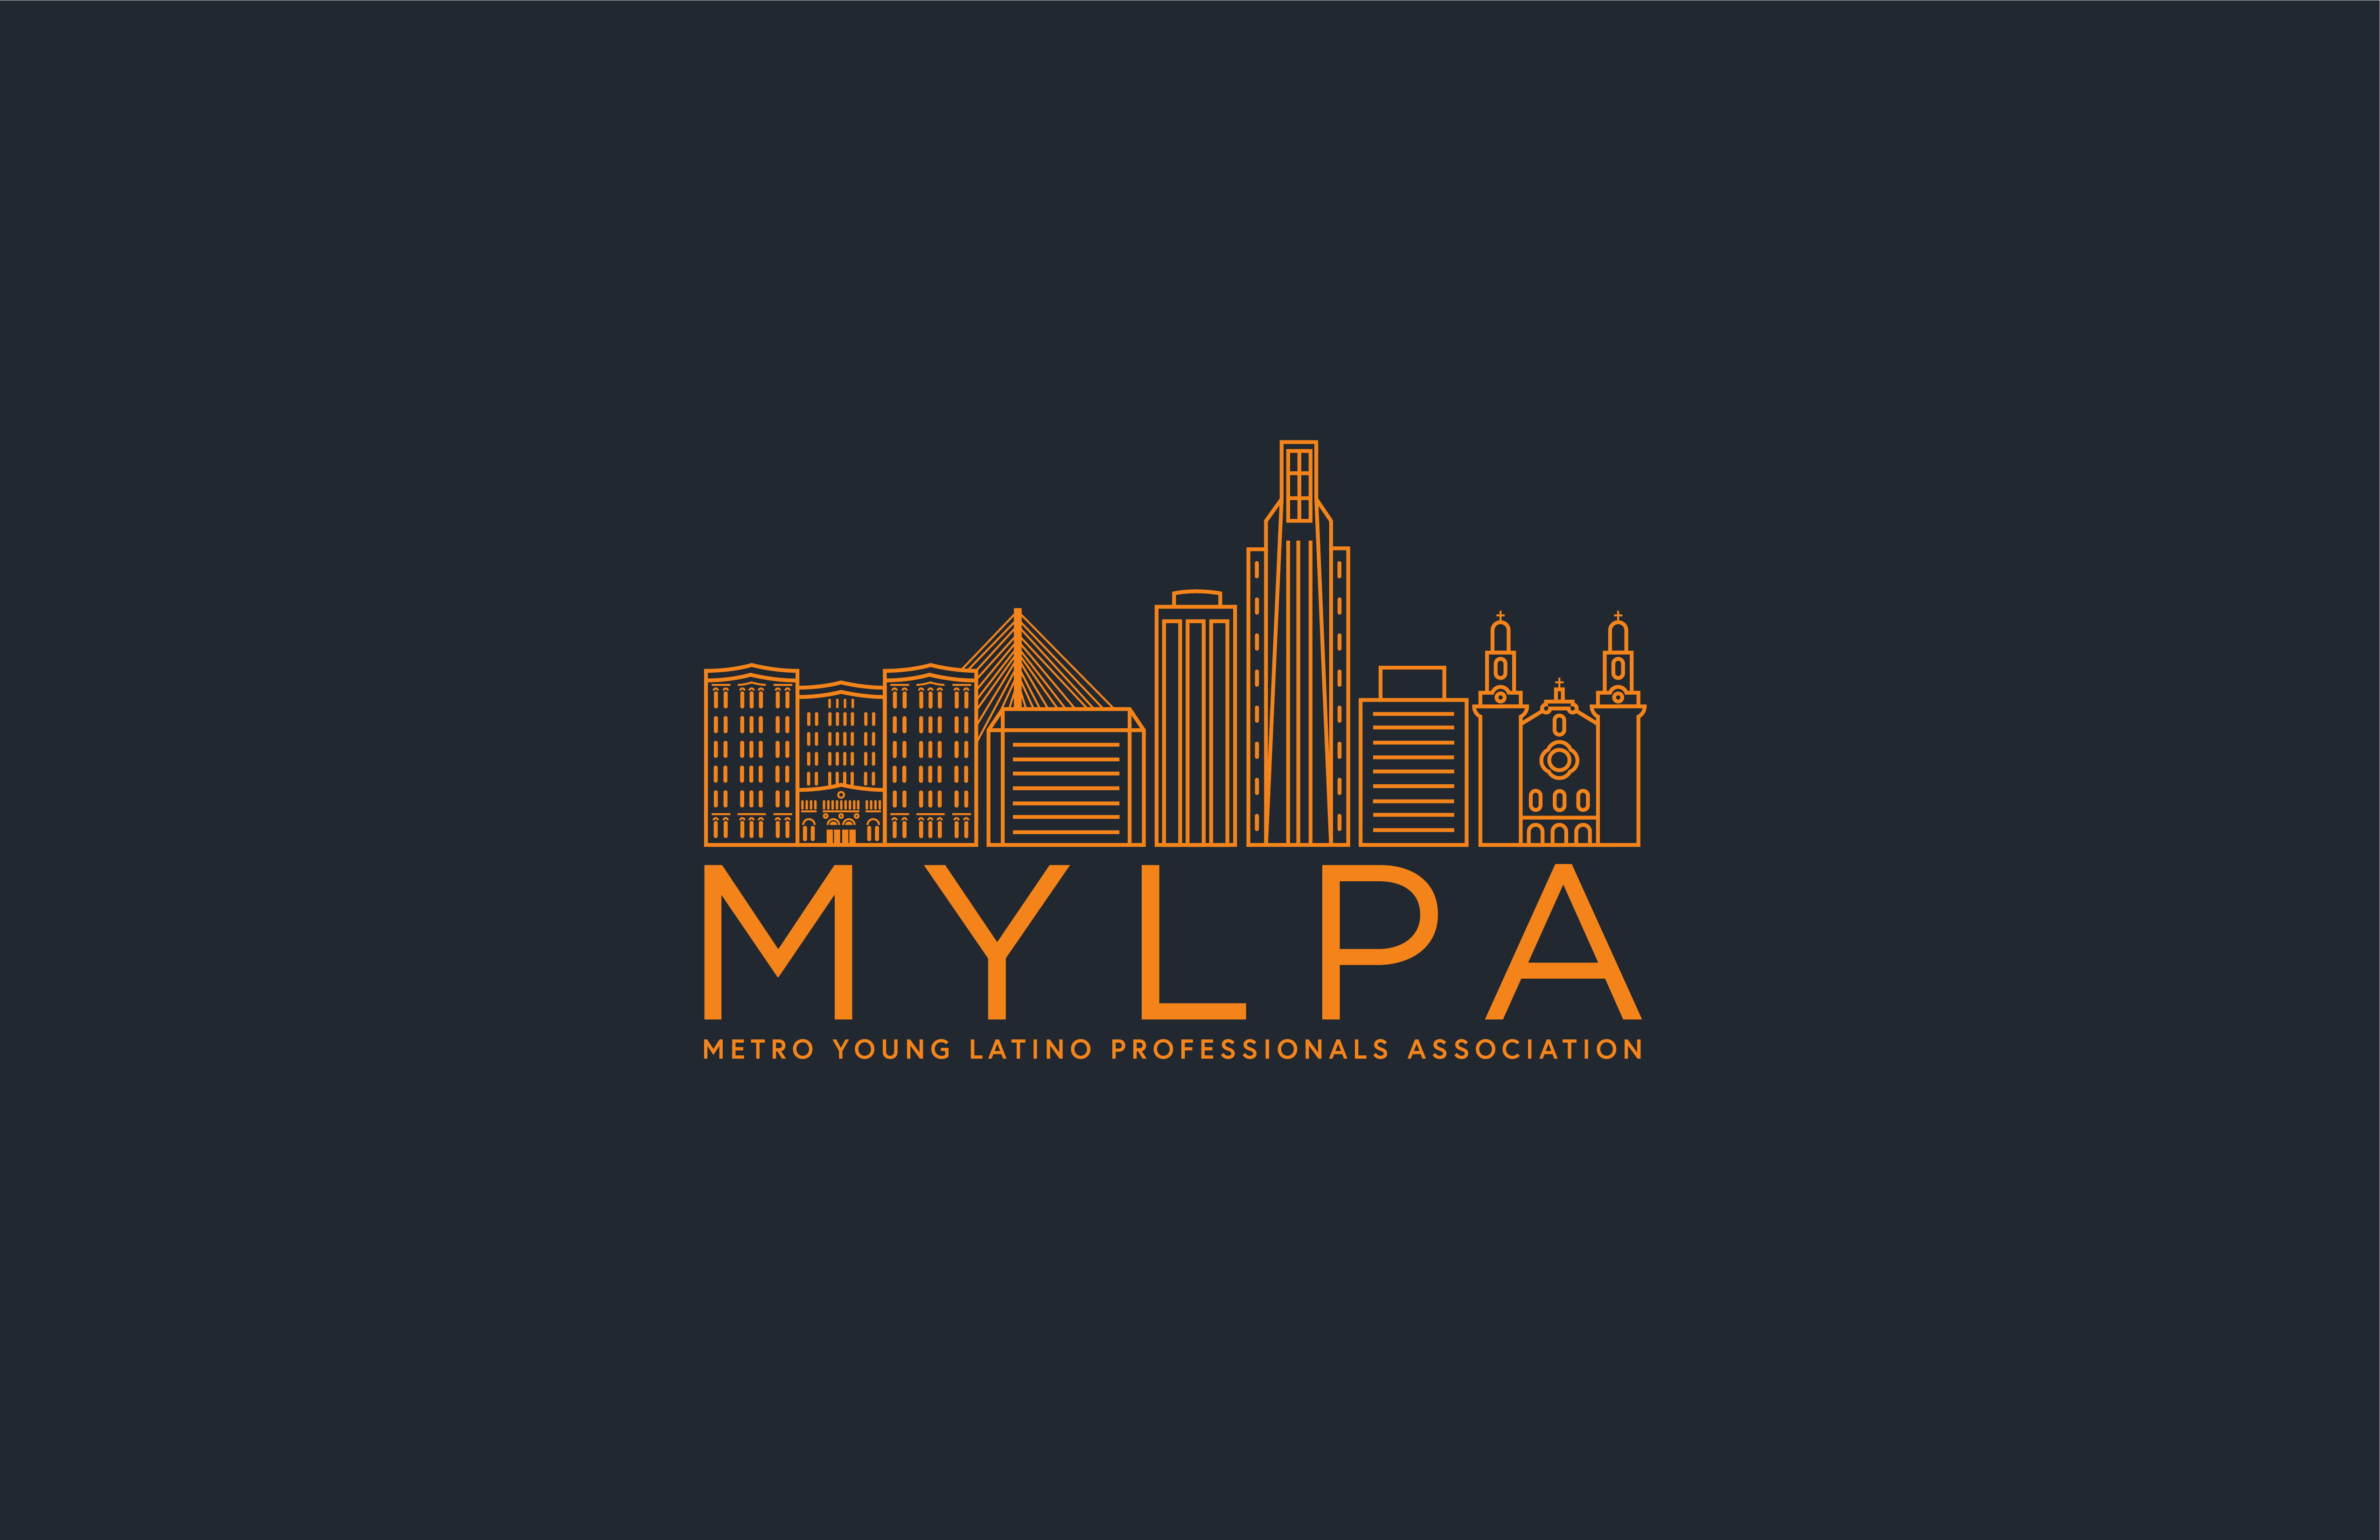 Dark background with orange outline of Omaha Skyline with MYLPA underneath.